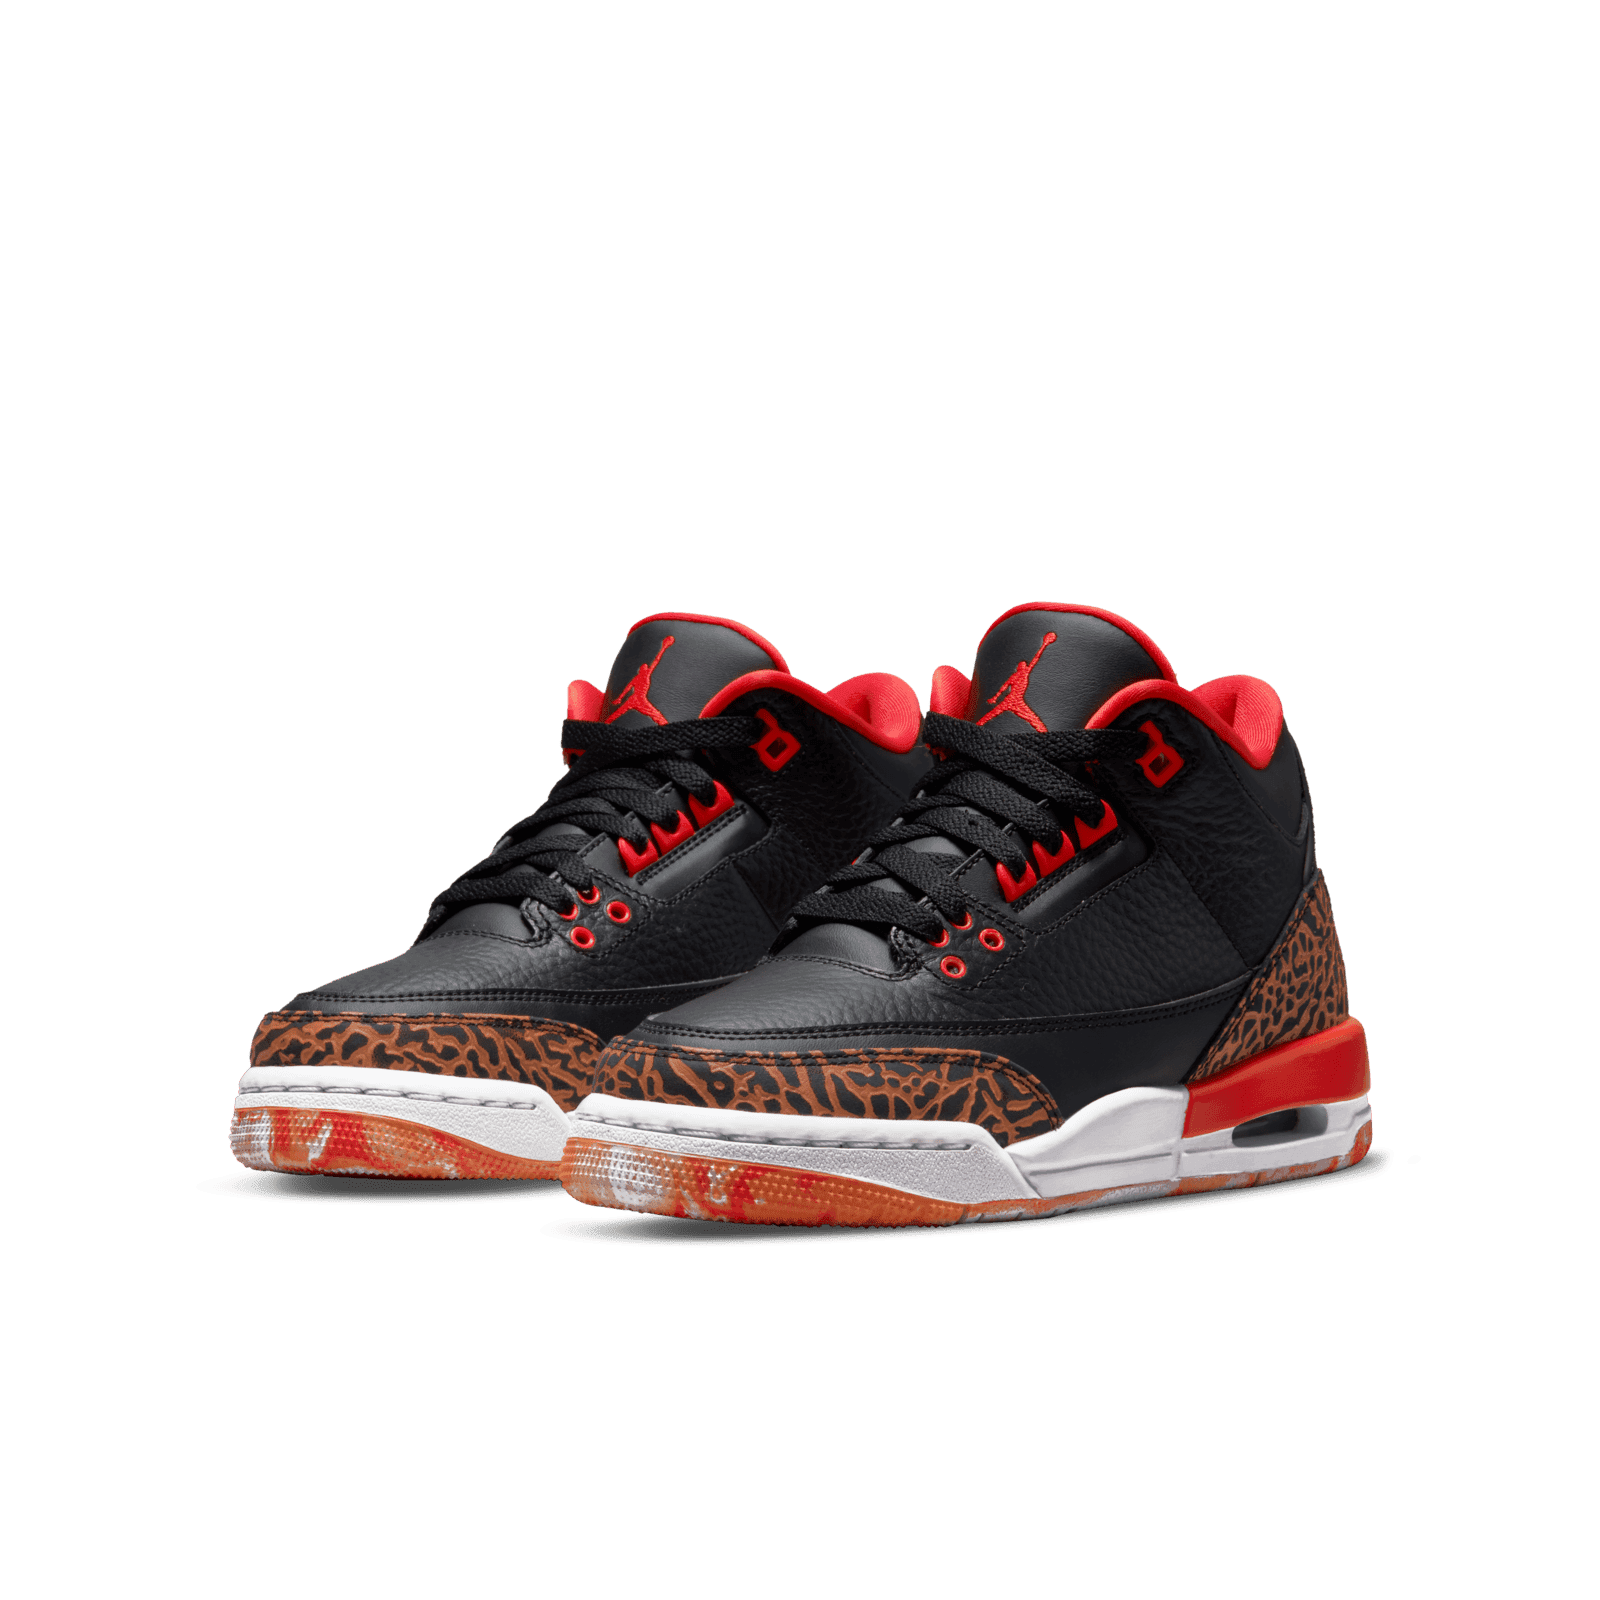 Air Jordan 3 Retro Kumquat (GS) - 441140-088 Raffles and Release Date